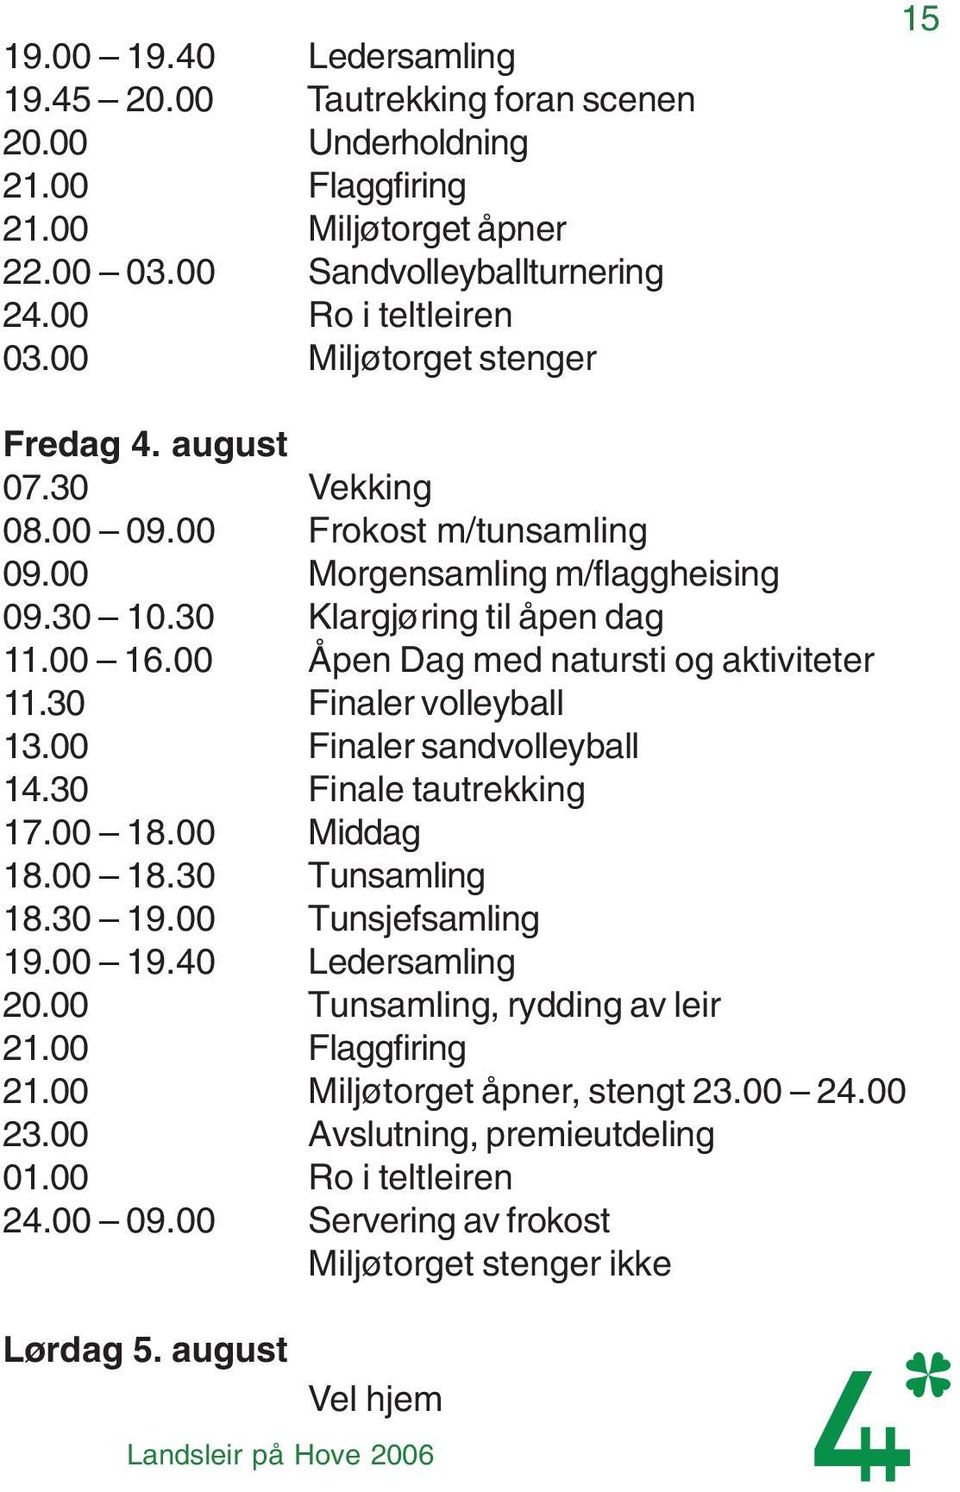 00 Åpen Dag med natursti og aktiviteter 11.30 Finaler volleyball 13.00 Finaler sandvolleyball 14.30 Finale tautrekking 17.00 18.00 Middag 18.00 18.30 Tunsamling 18.30 19.00 Tunsjefsamling 19.00 19.